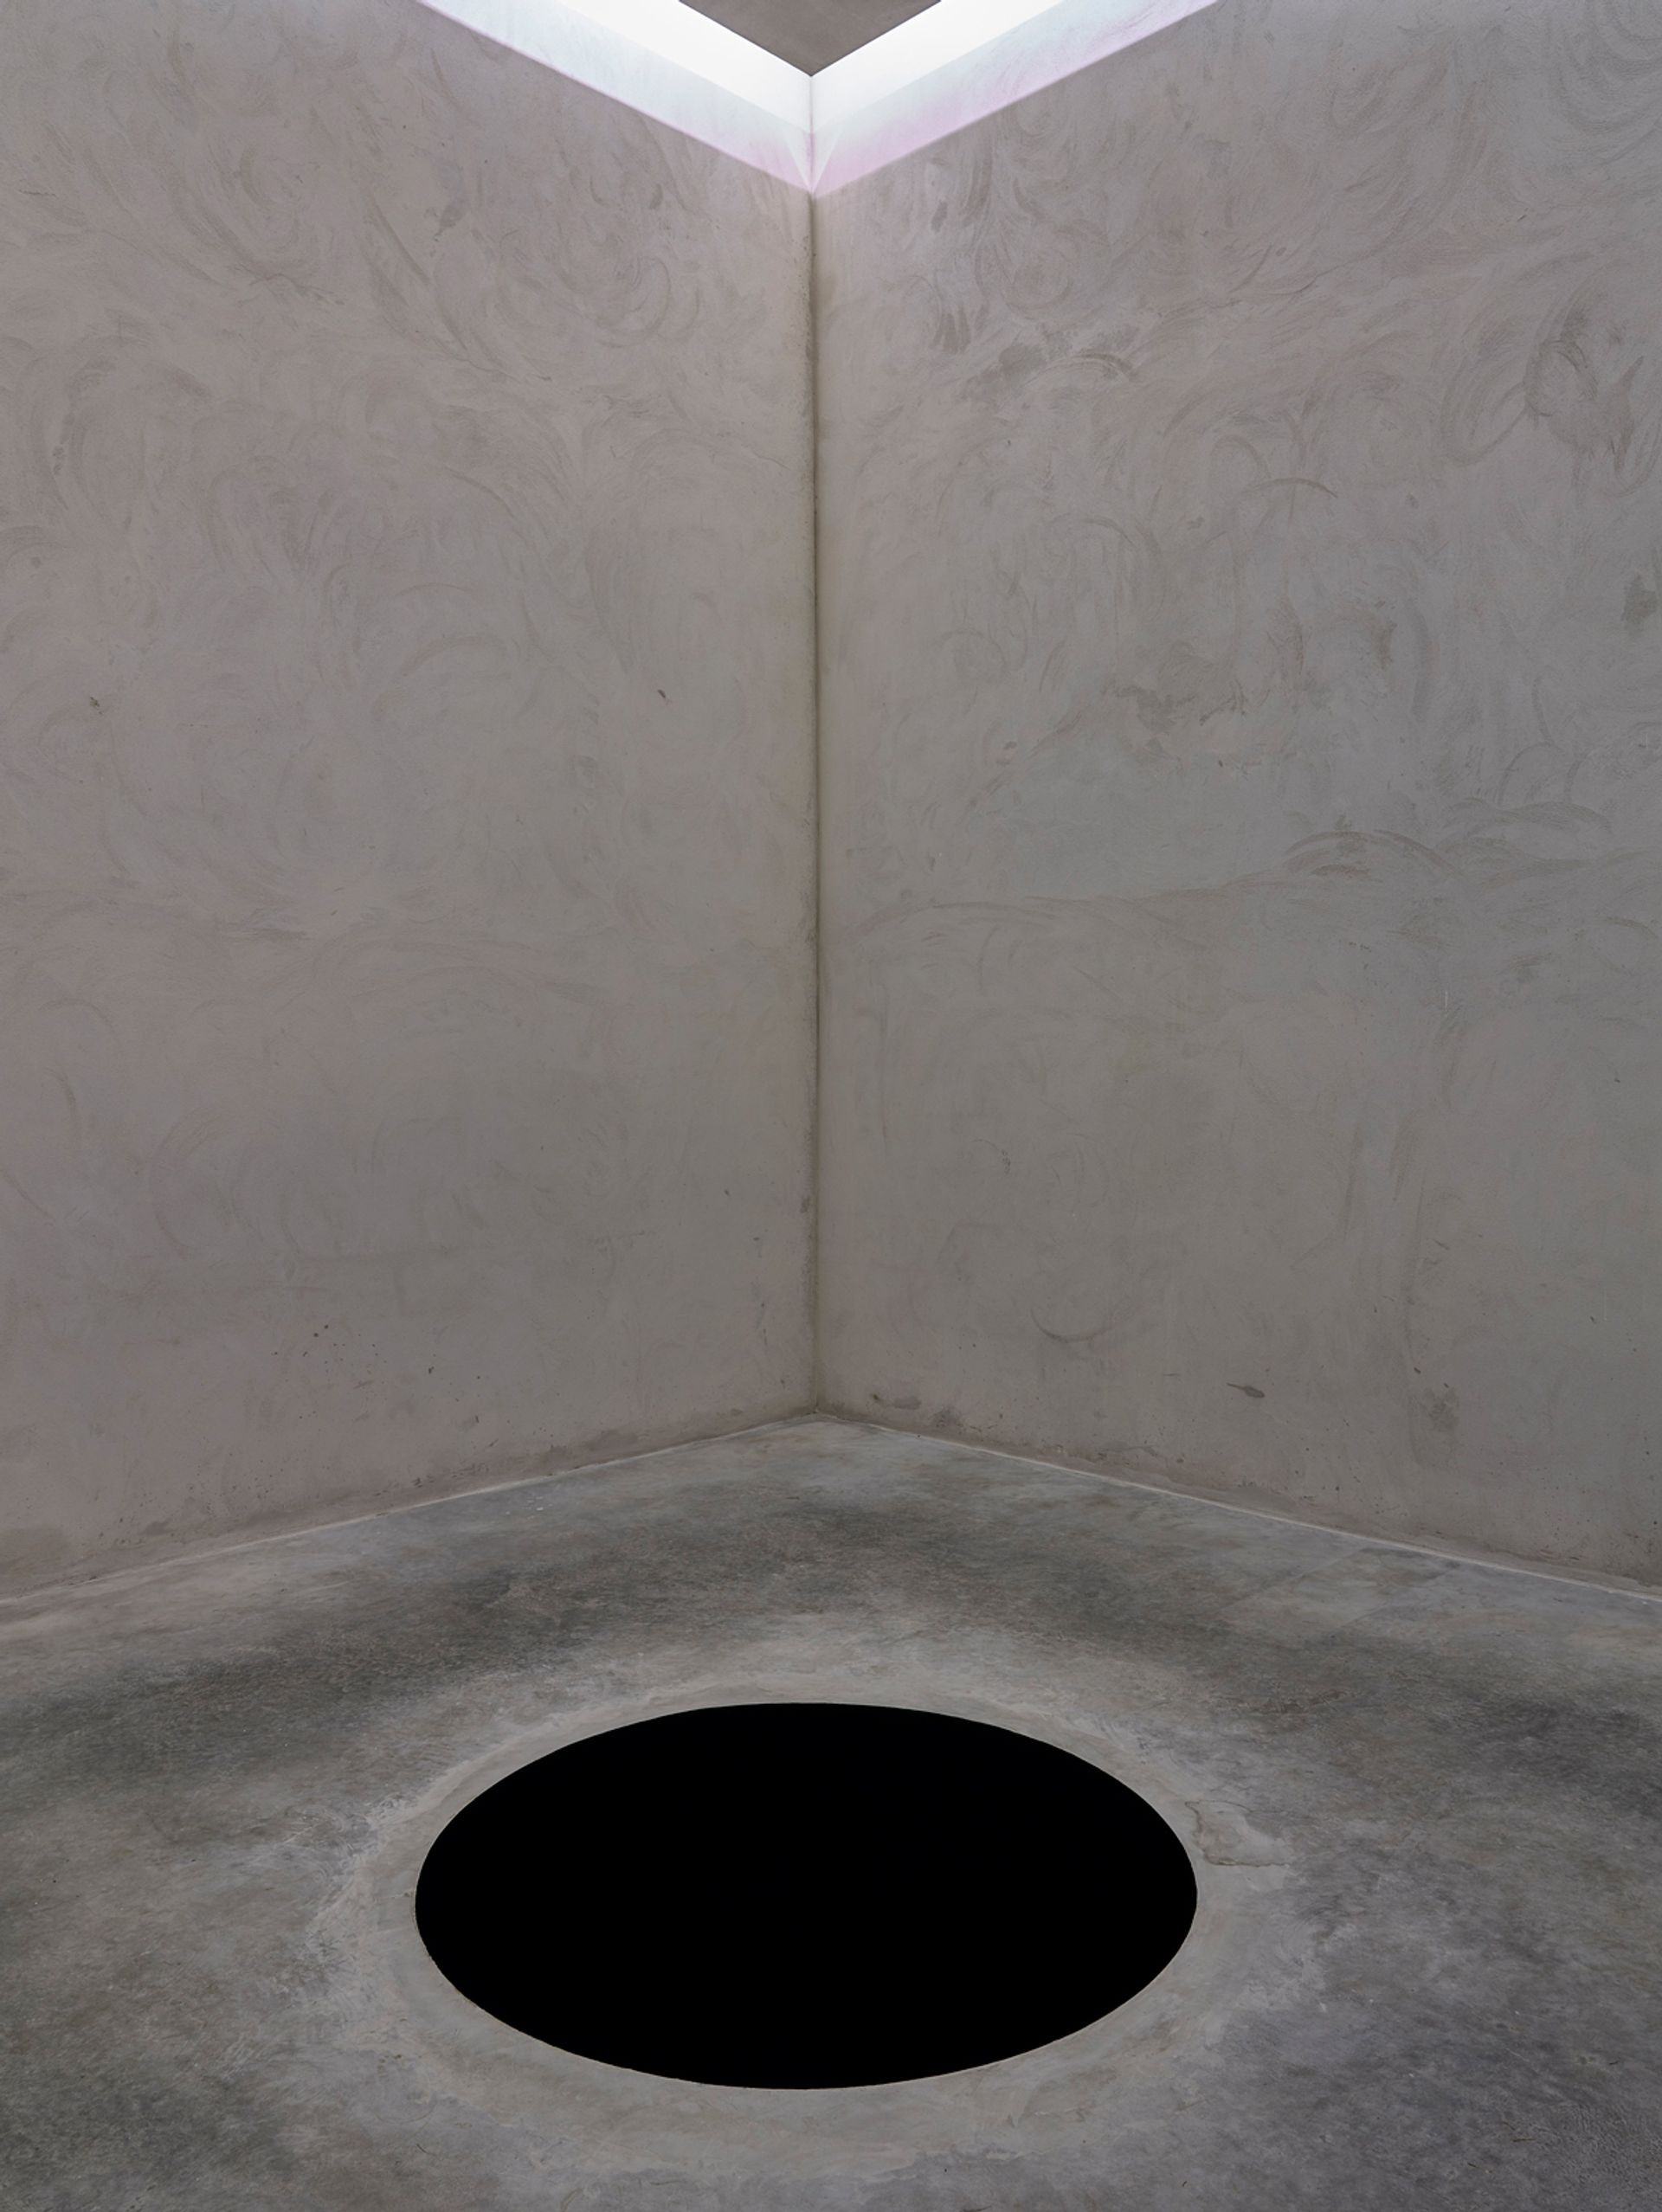 The interior of Anish Kapoor's installation Descent into Limbo (1992) at the Fundação de Serralves, Museum of Contemporary Art in Porto Photo: Filipe Braga; Courtesy Fundação de Serralves, Museum of Contemporary Art, Porto